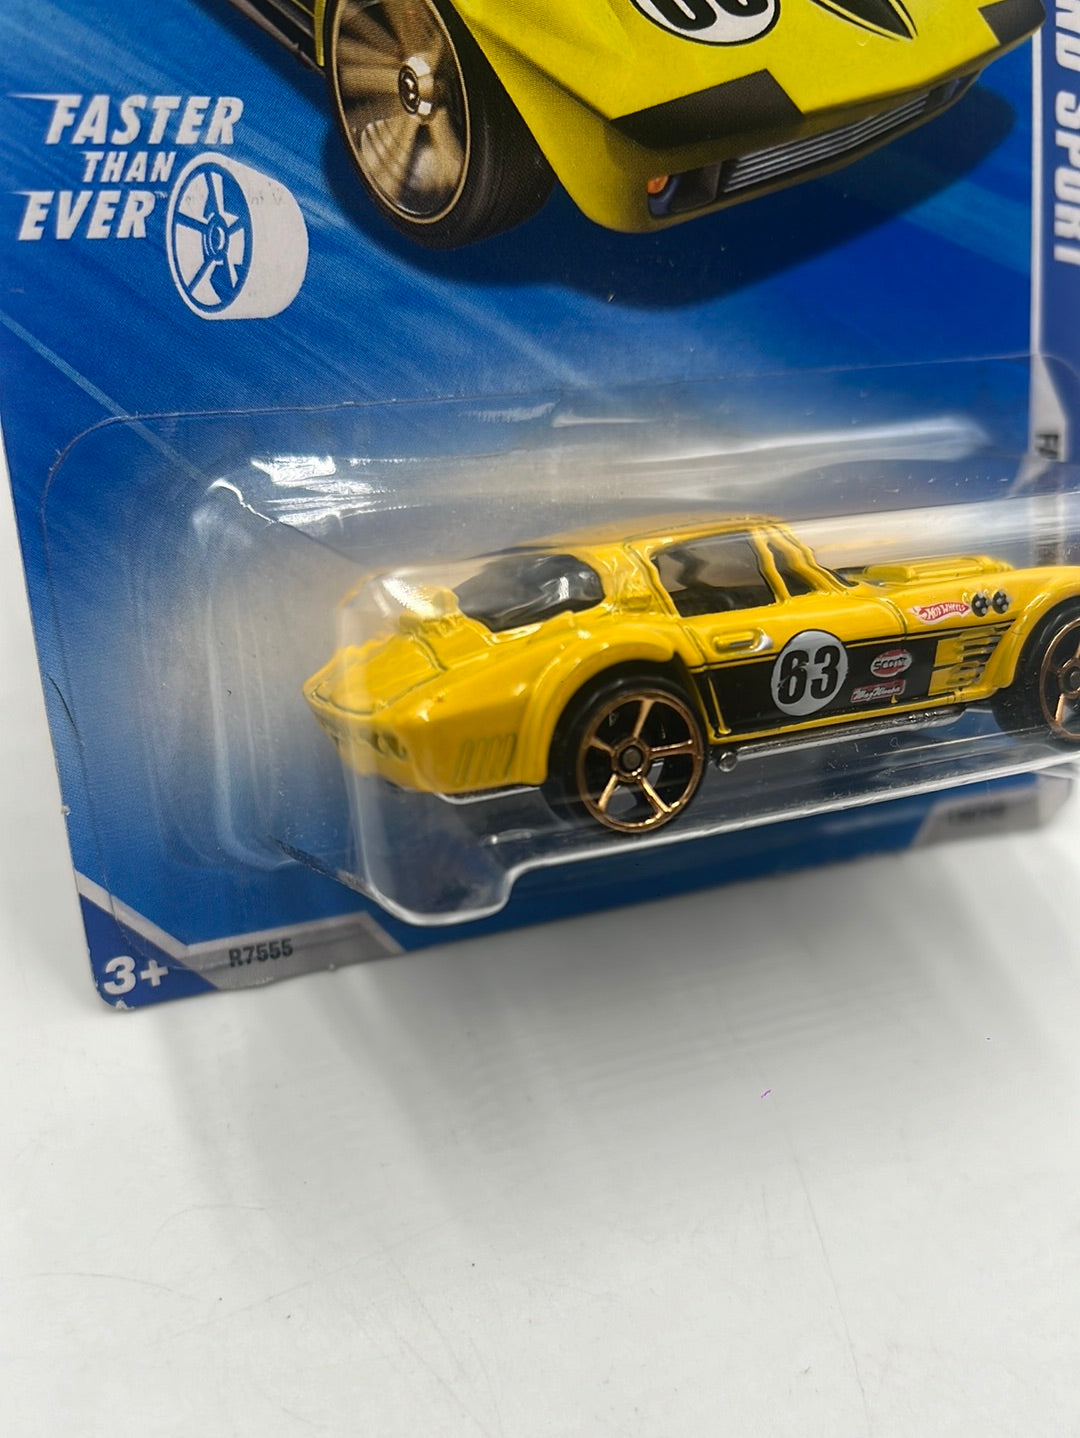 2010 Hot Wheels Faster Than Ever Corvette Grand Sport Yellow 130/240 18C